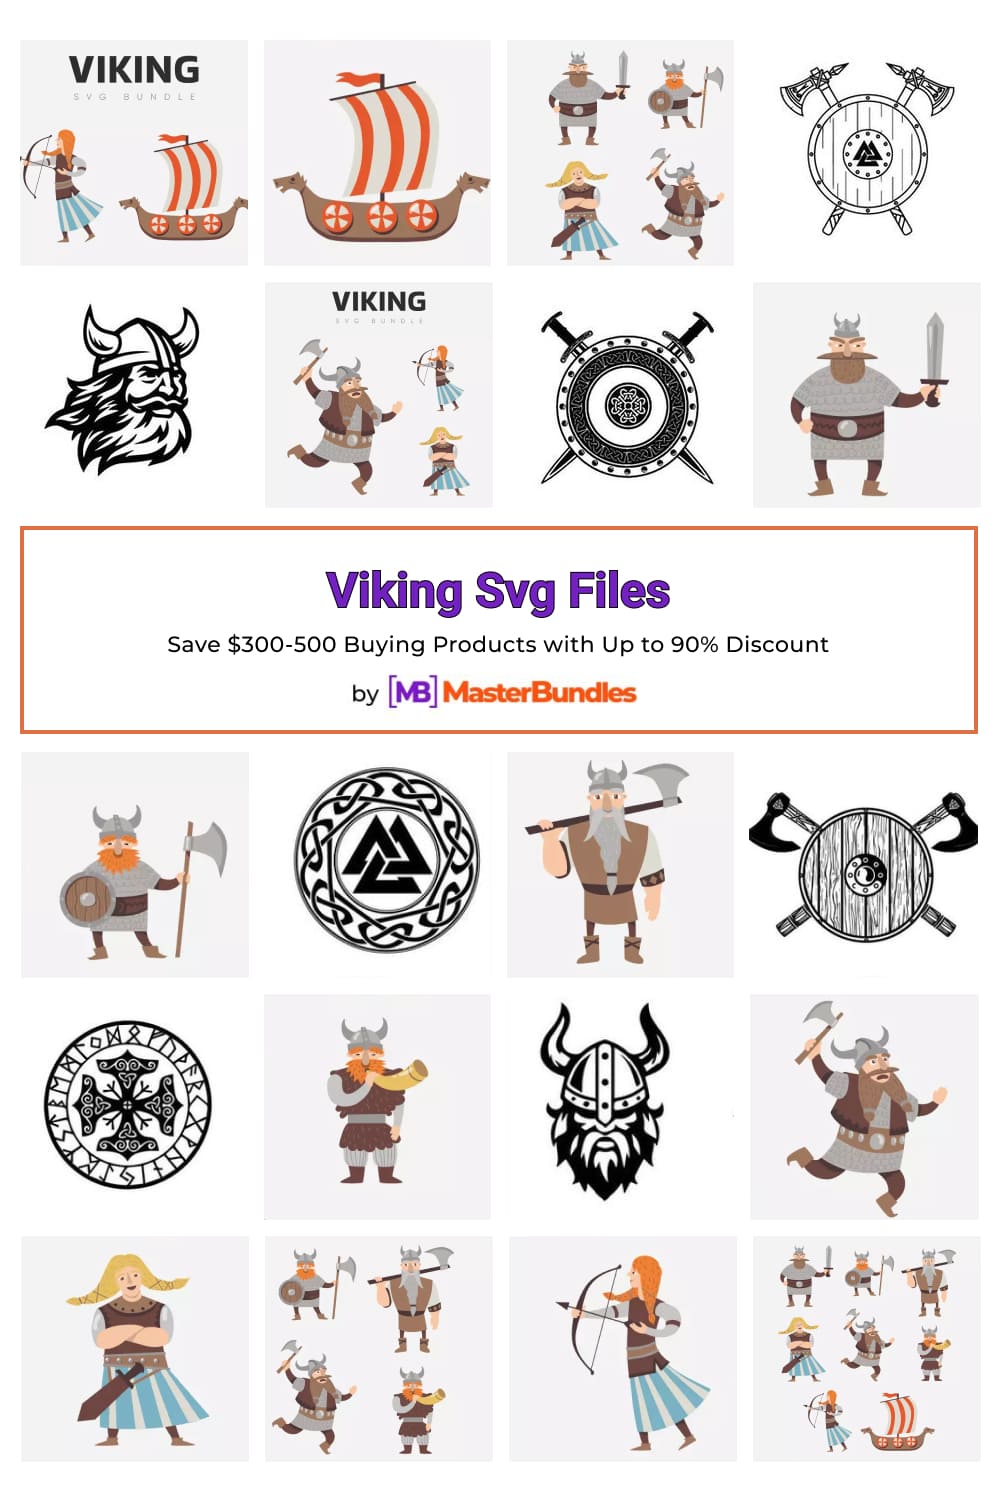 Viking Svg Files Pinterest image.